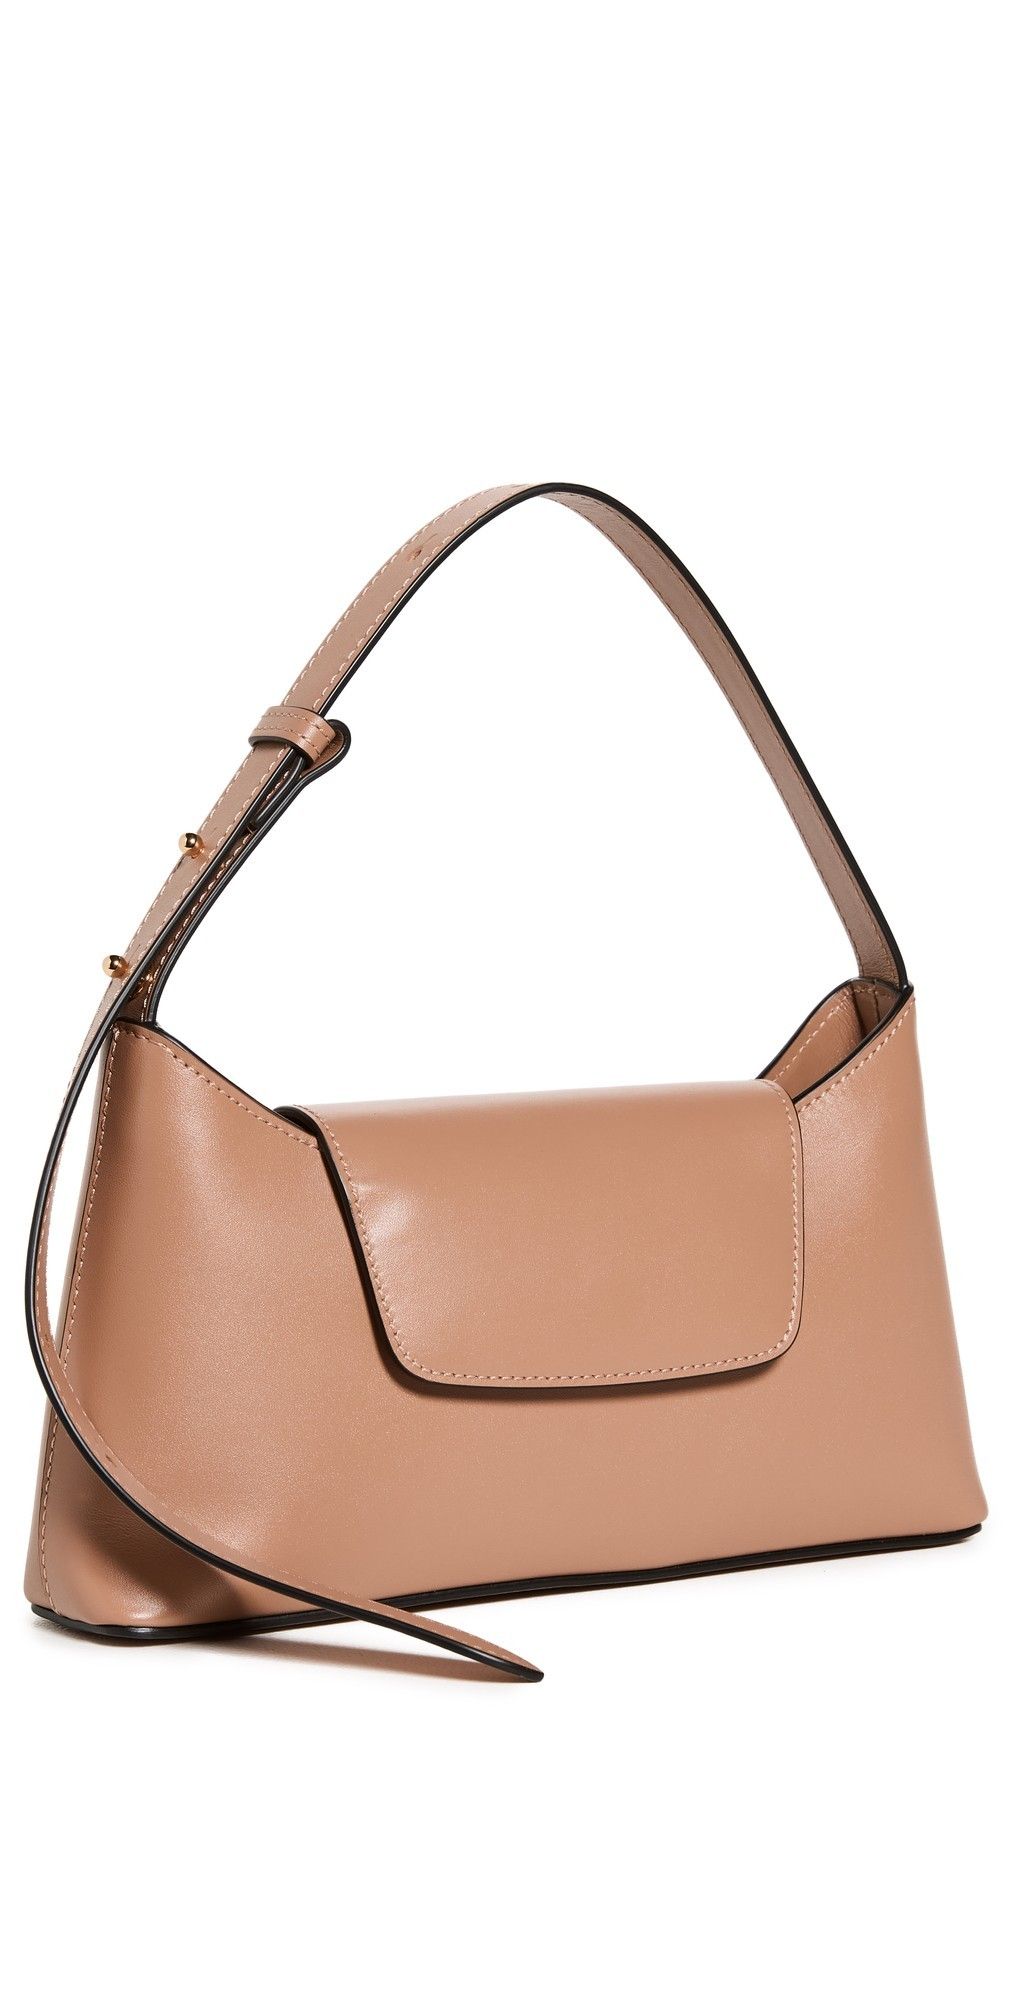 ladies designer purses cross body handbags trendy bags for women shoulder bags | Shopbop